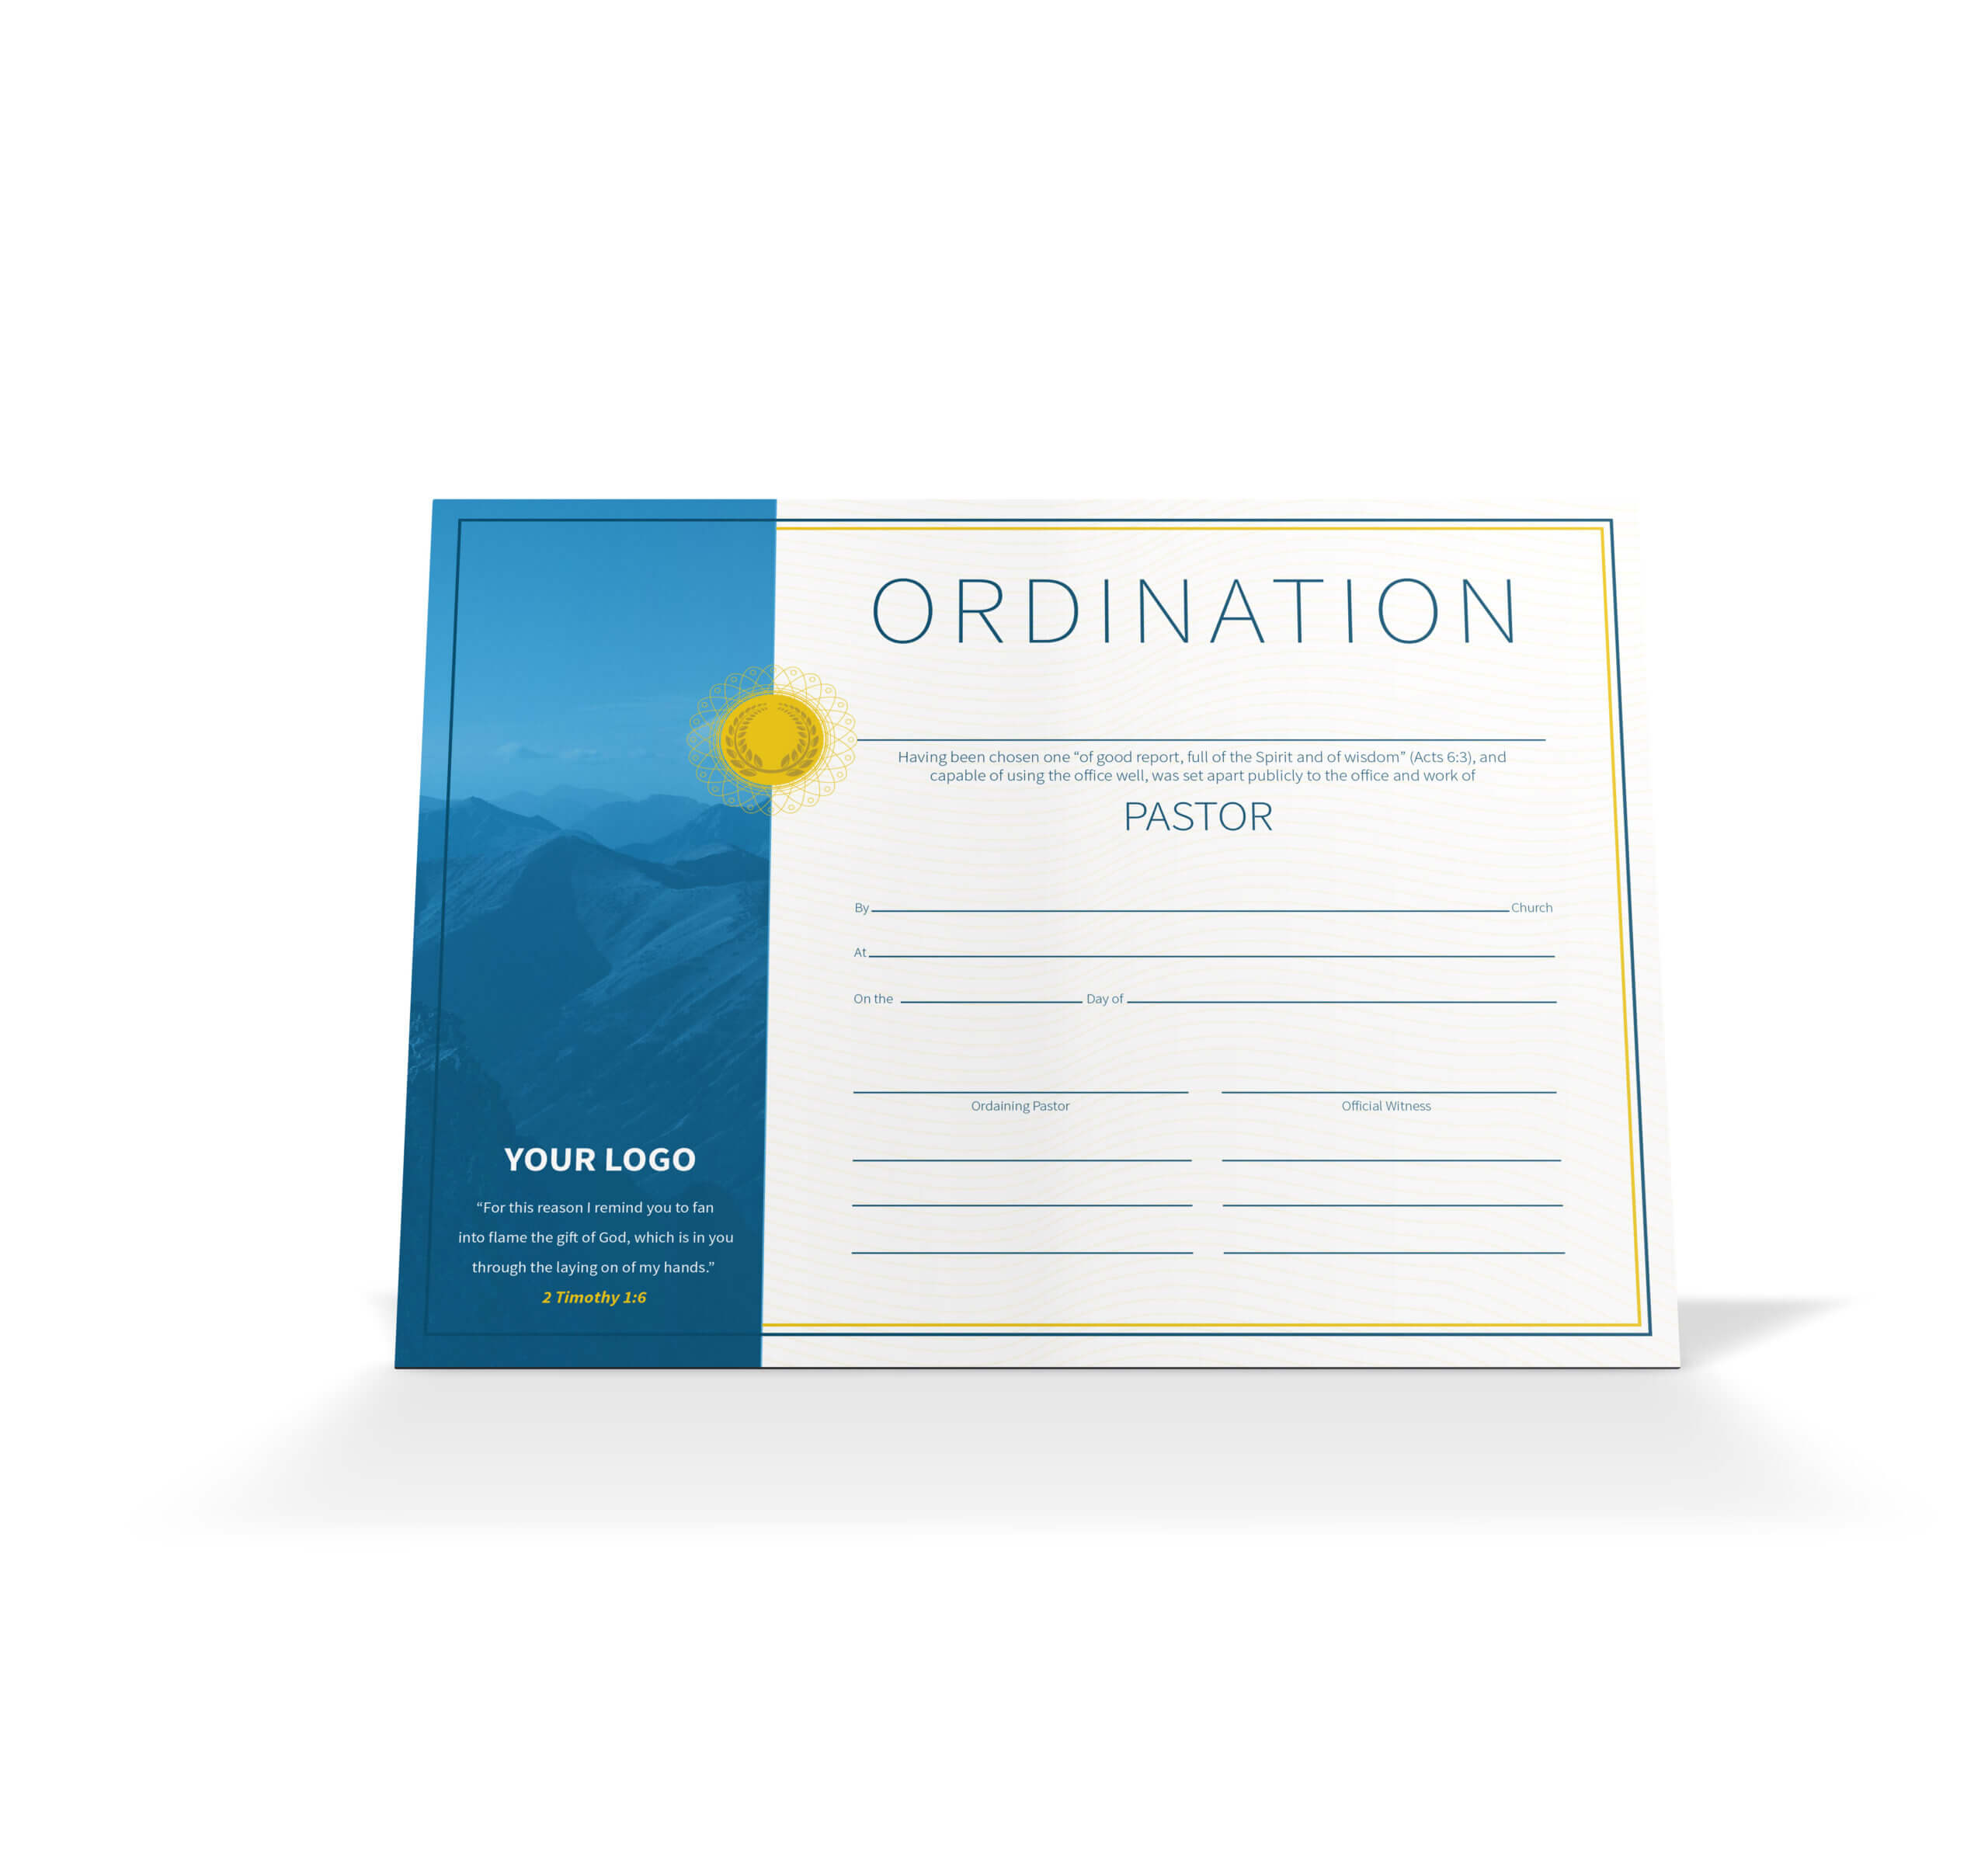 Pastor Ordination Certificate – Vineyard Digital Membership Intended For Ordination Certificate Templates